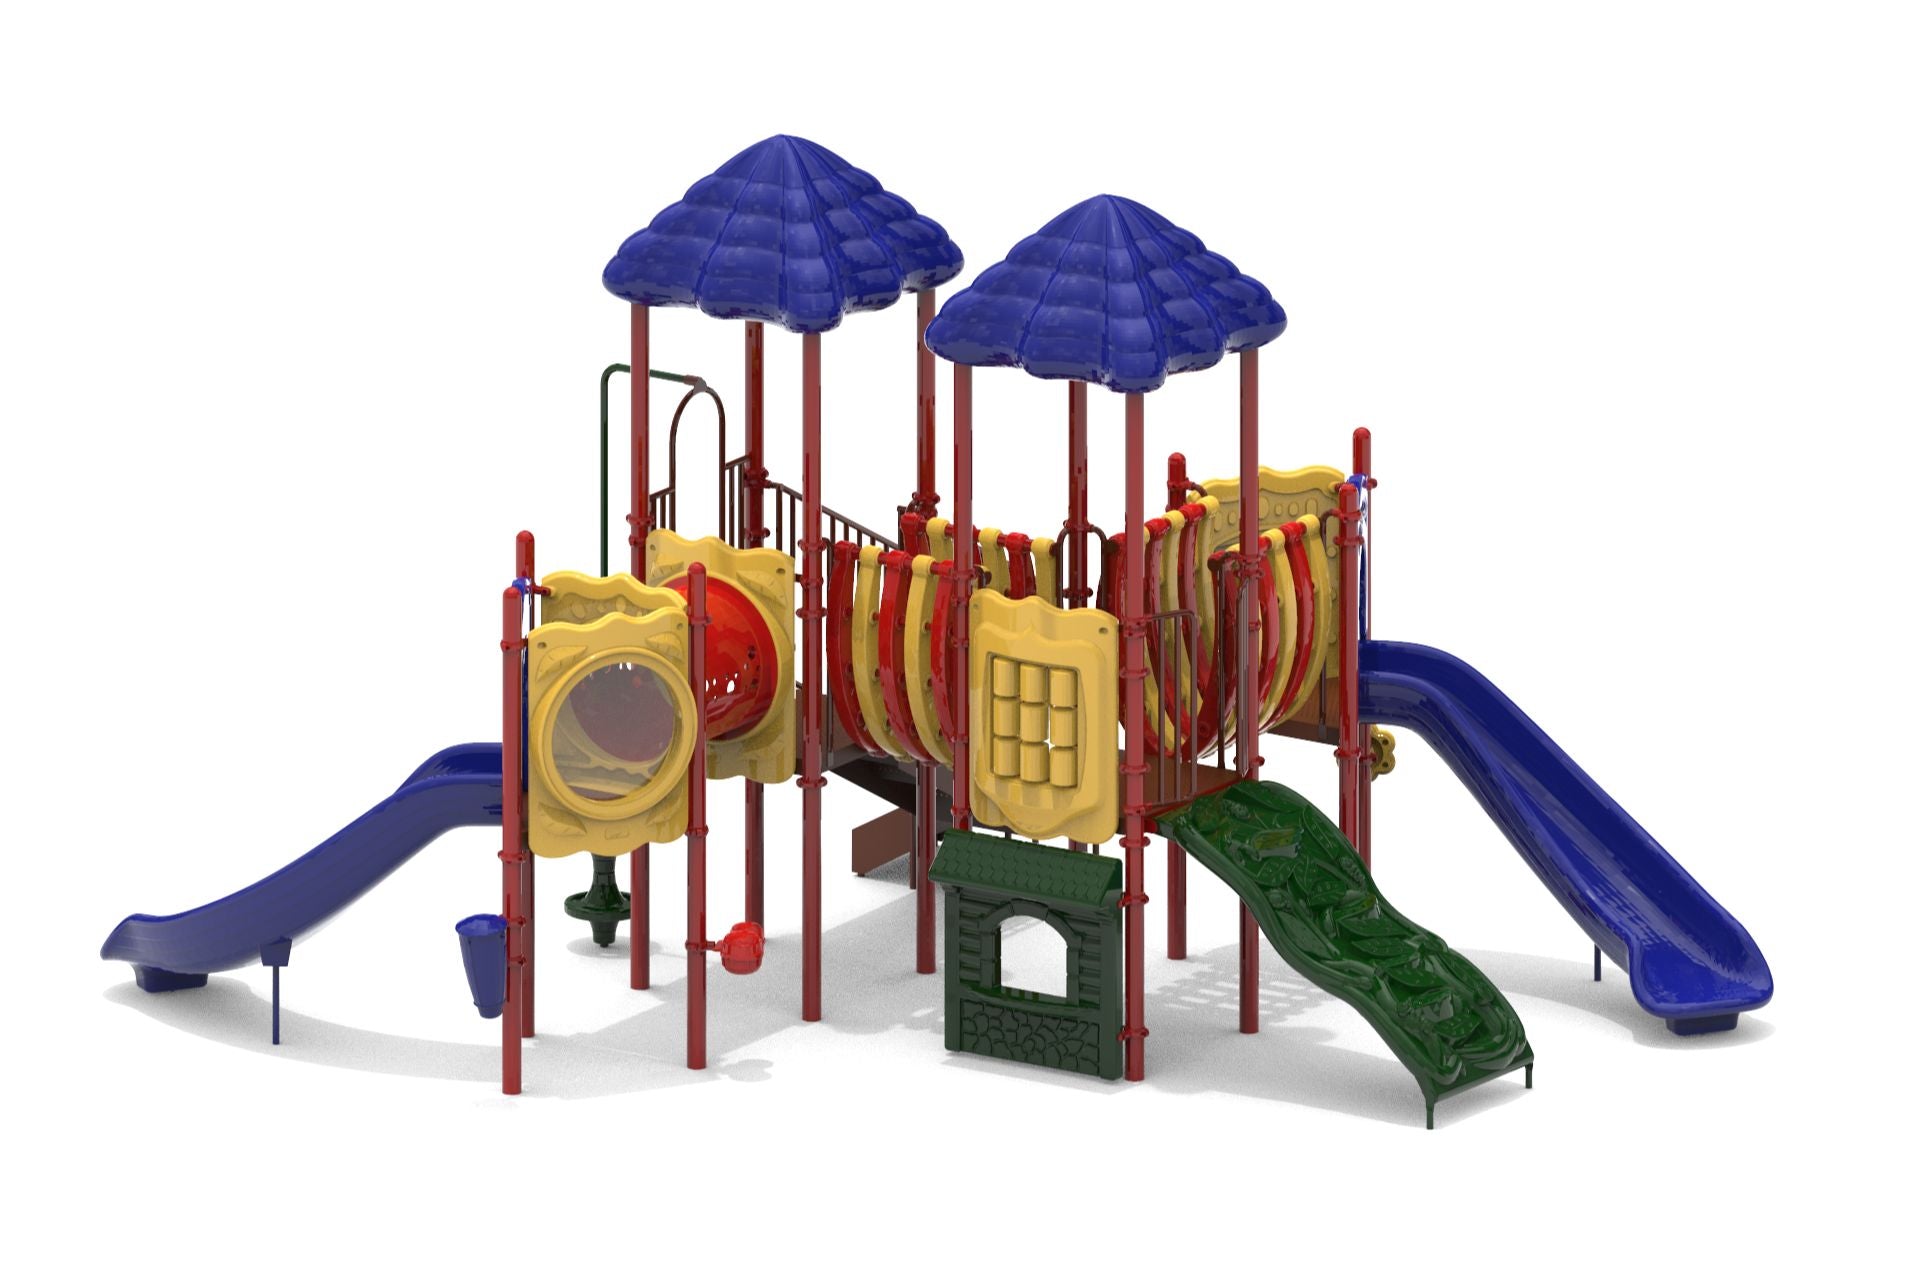 Pike's Peak Playground Play System